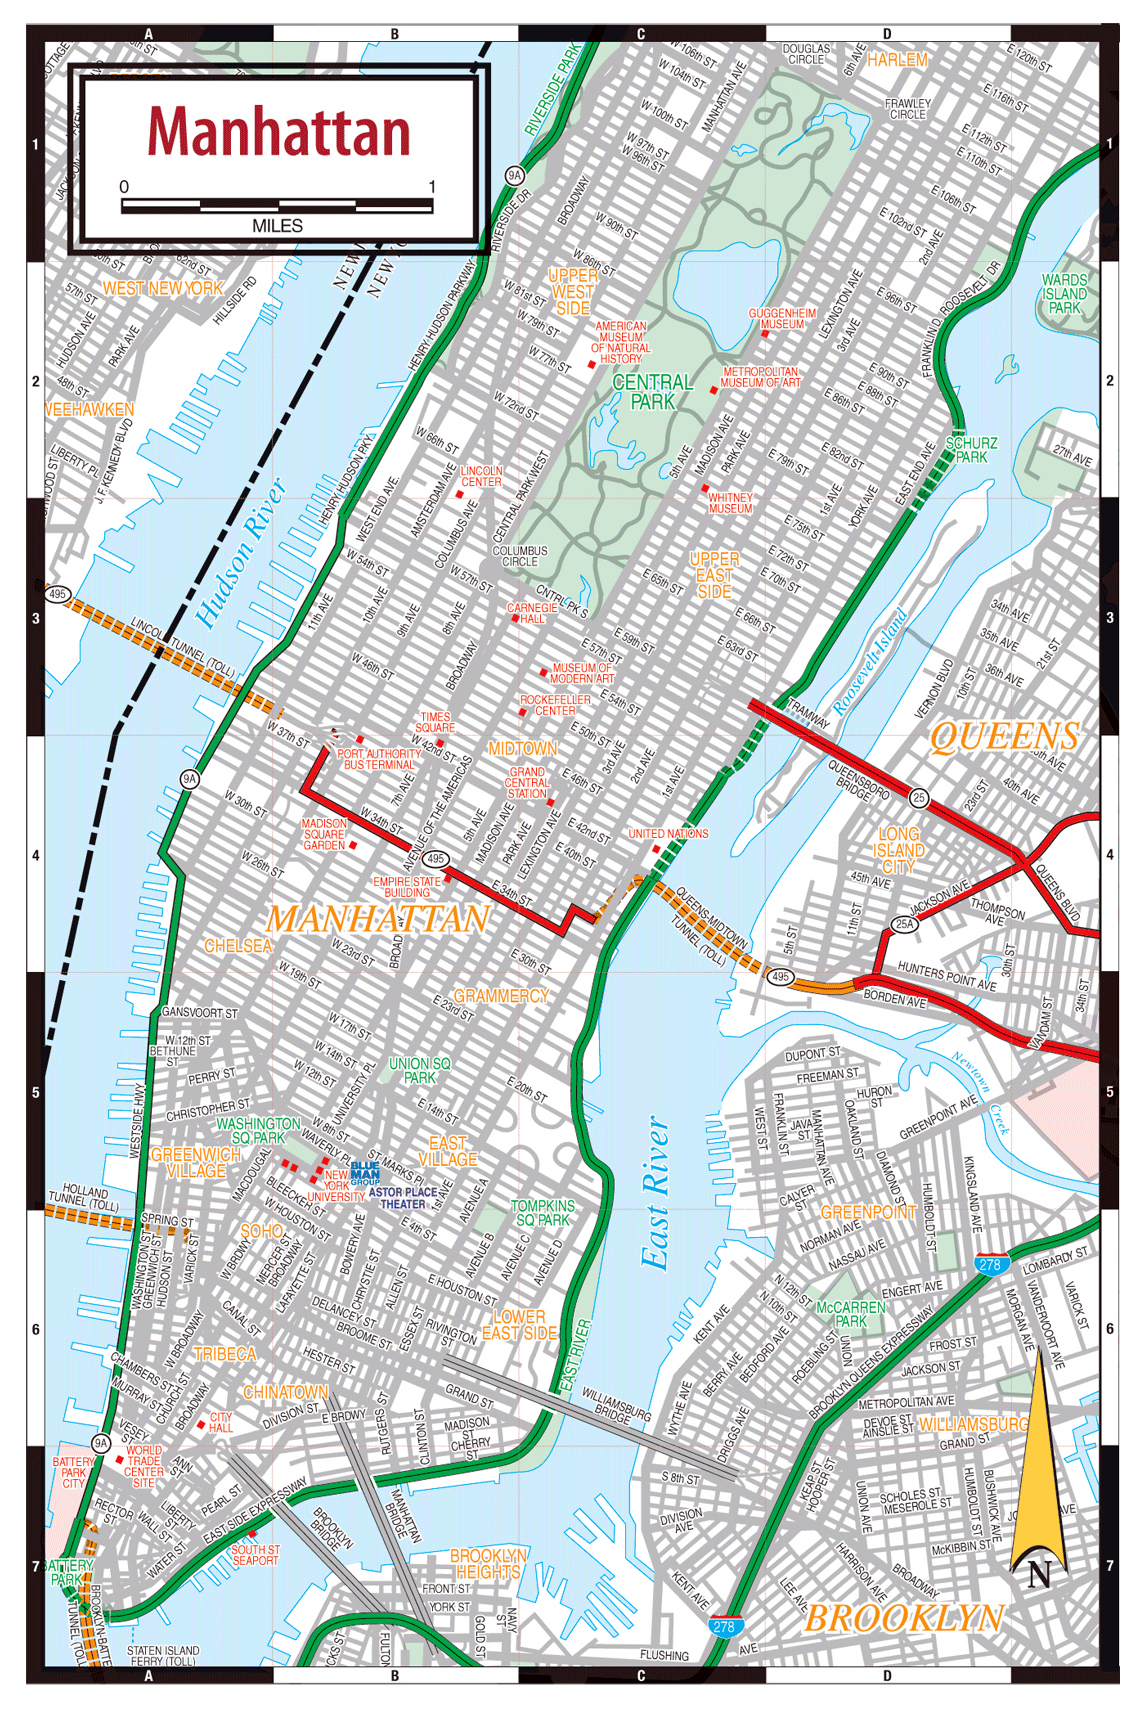 Manhattan_streets_map.jpg